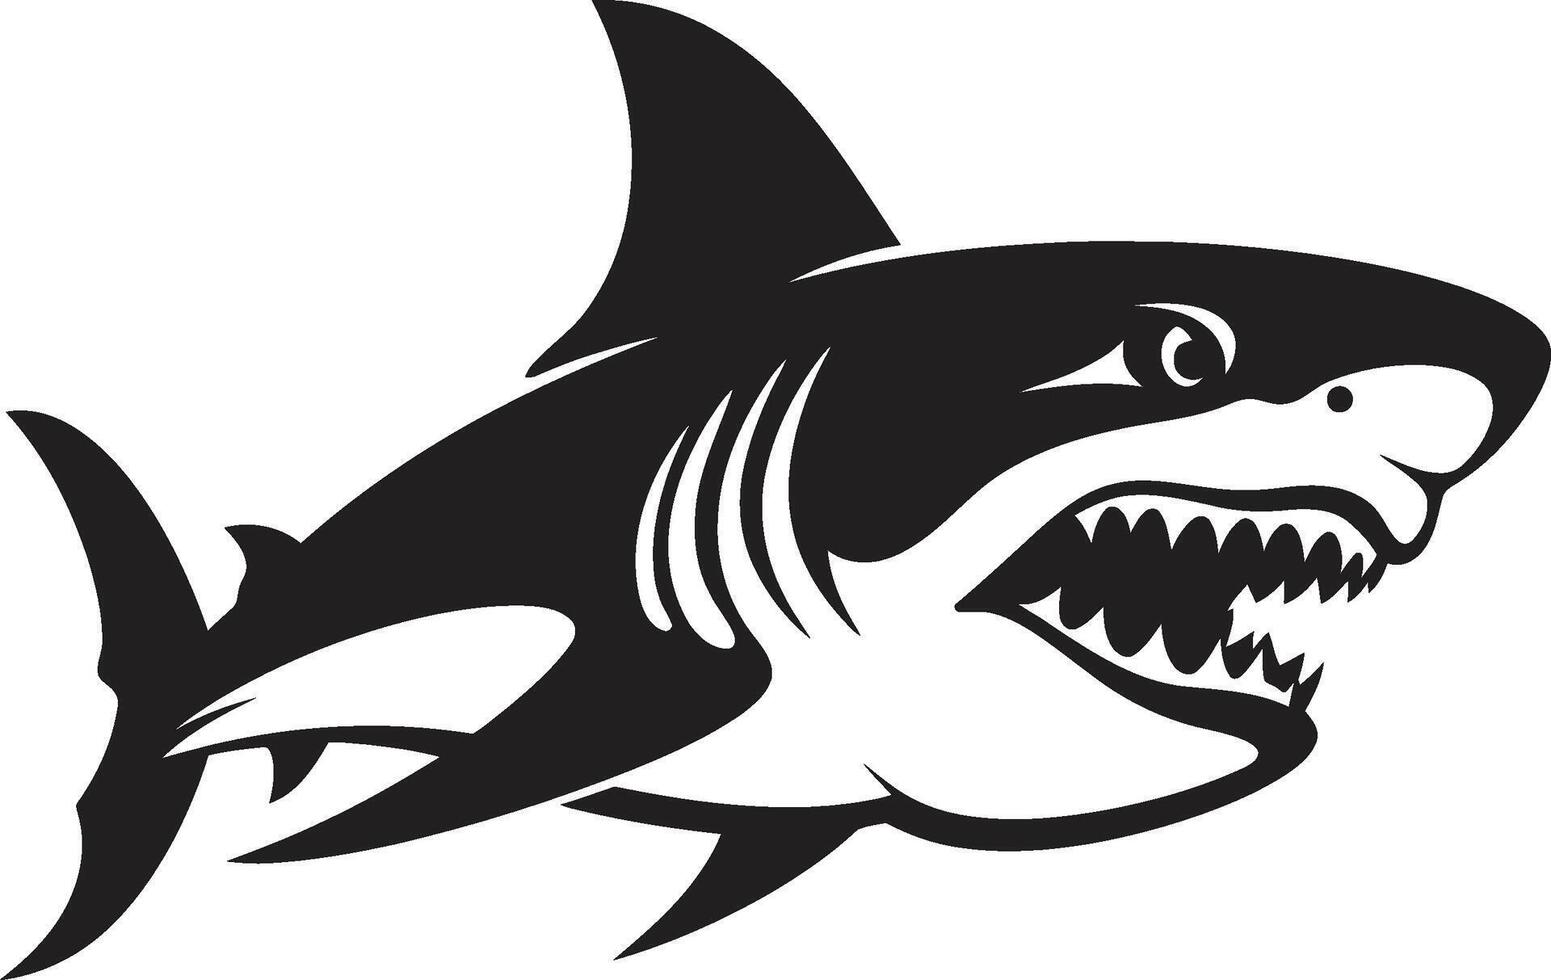 Swift Sea Sovereign Black Shark Dynamic Depths Elegant for Black Shark Emblem vector